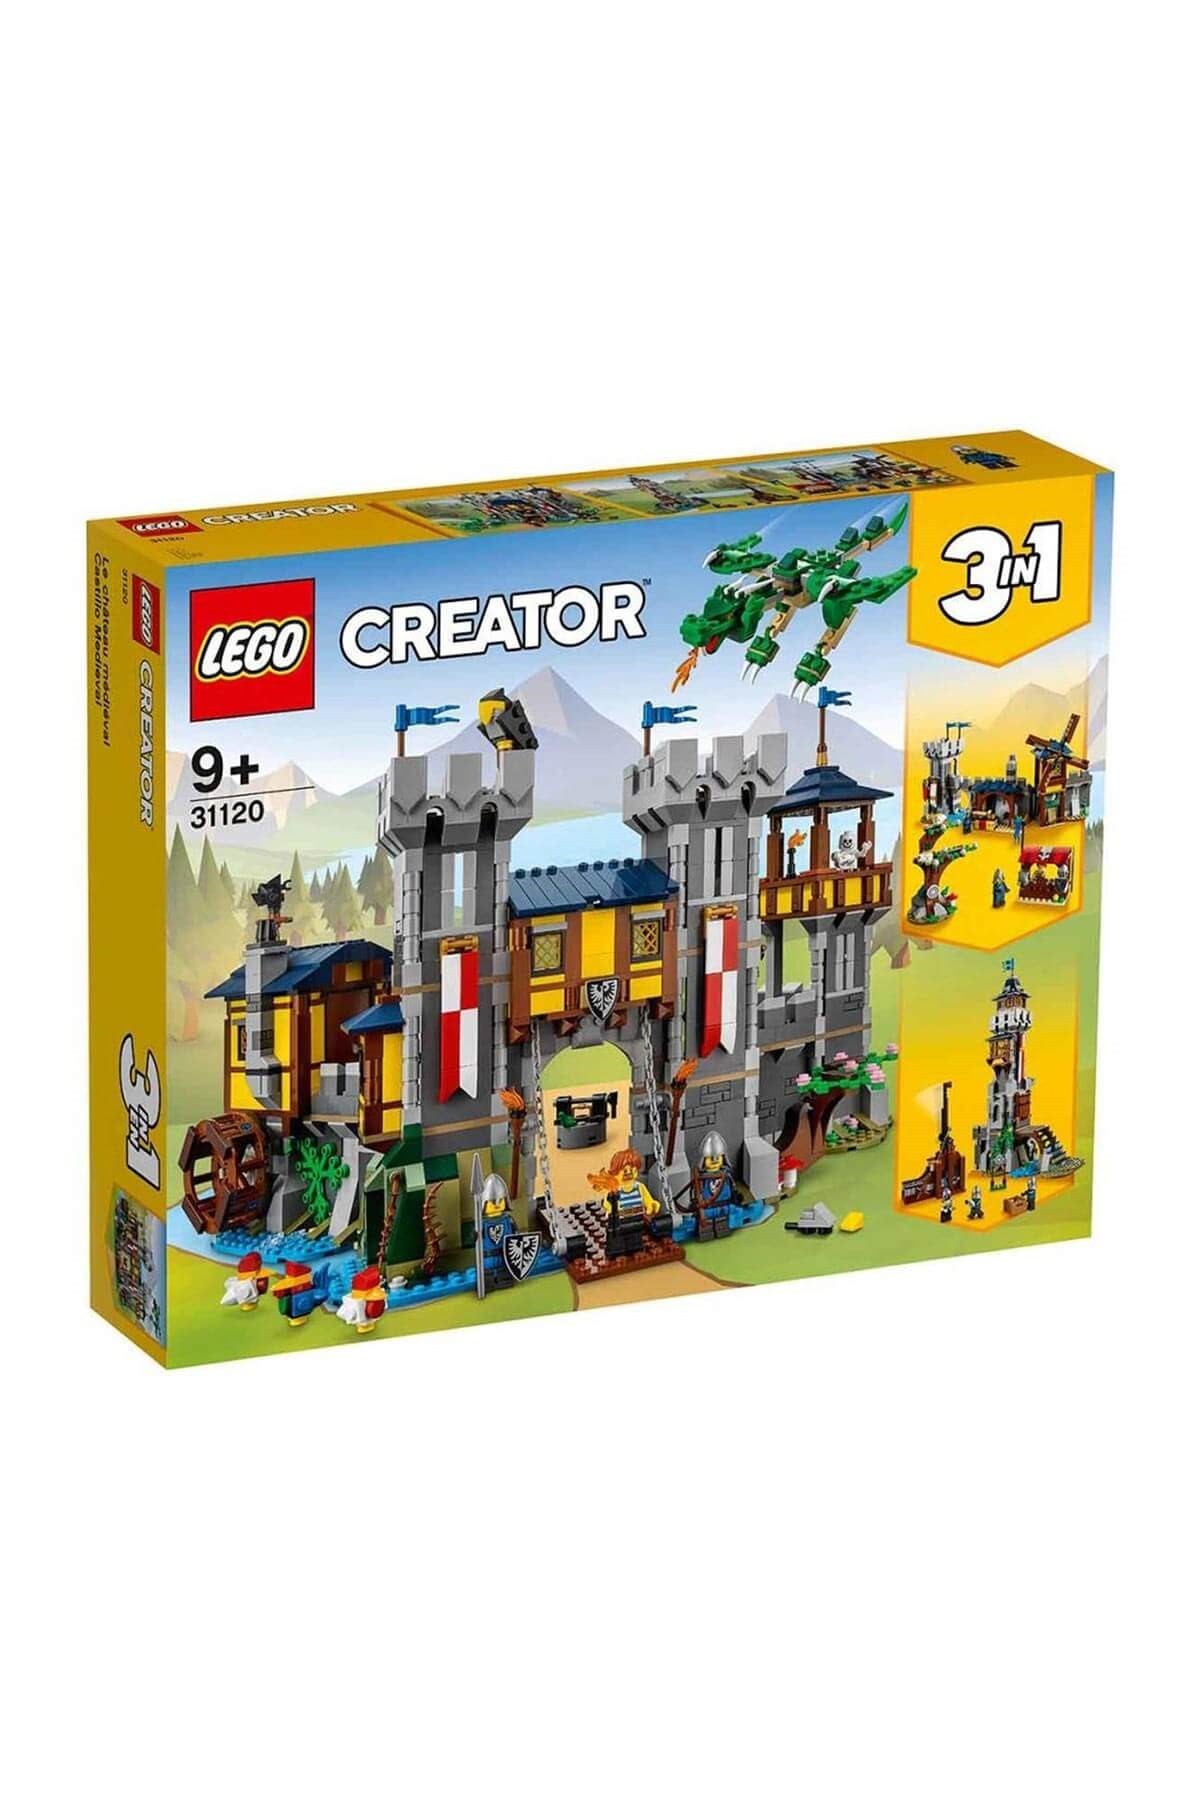 Lego Creator Medieval Castle